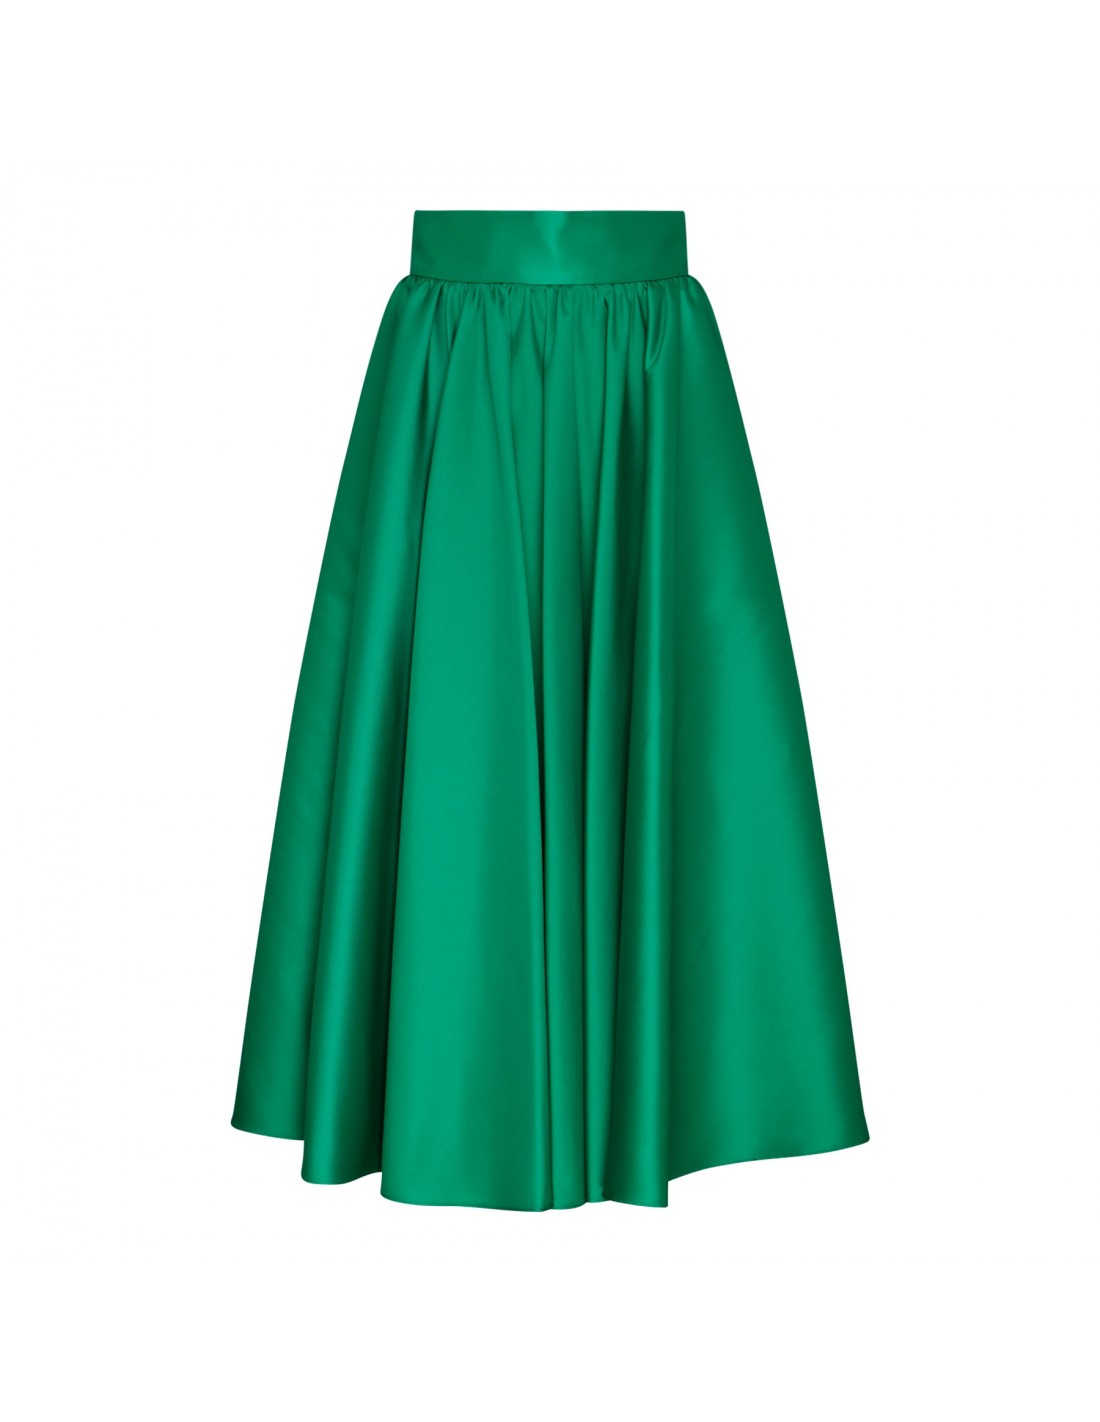 Green pleated skirt